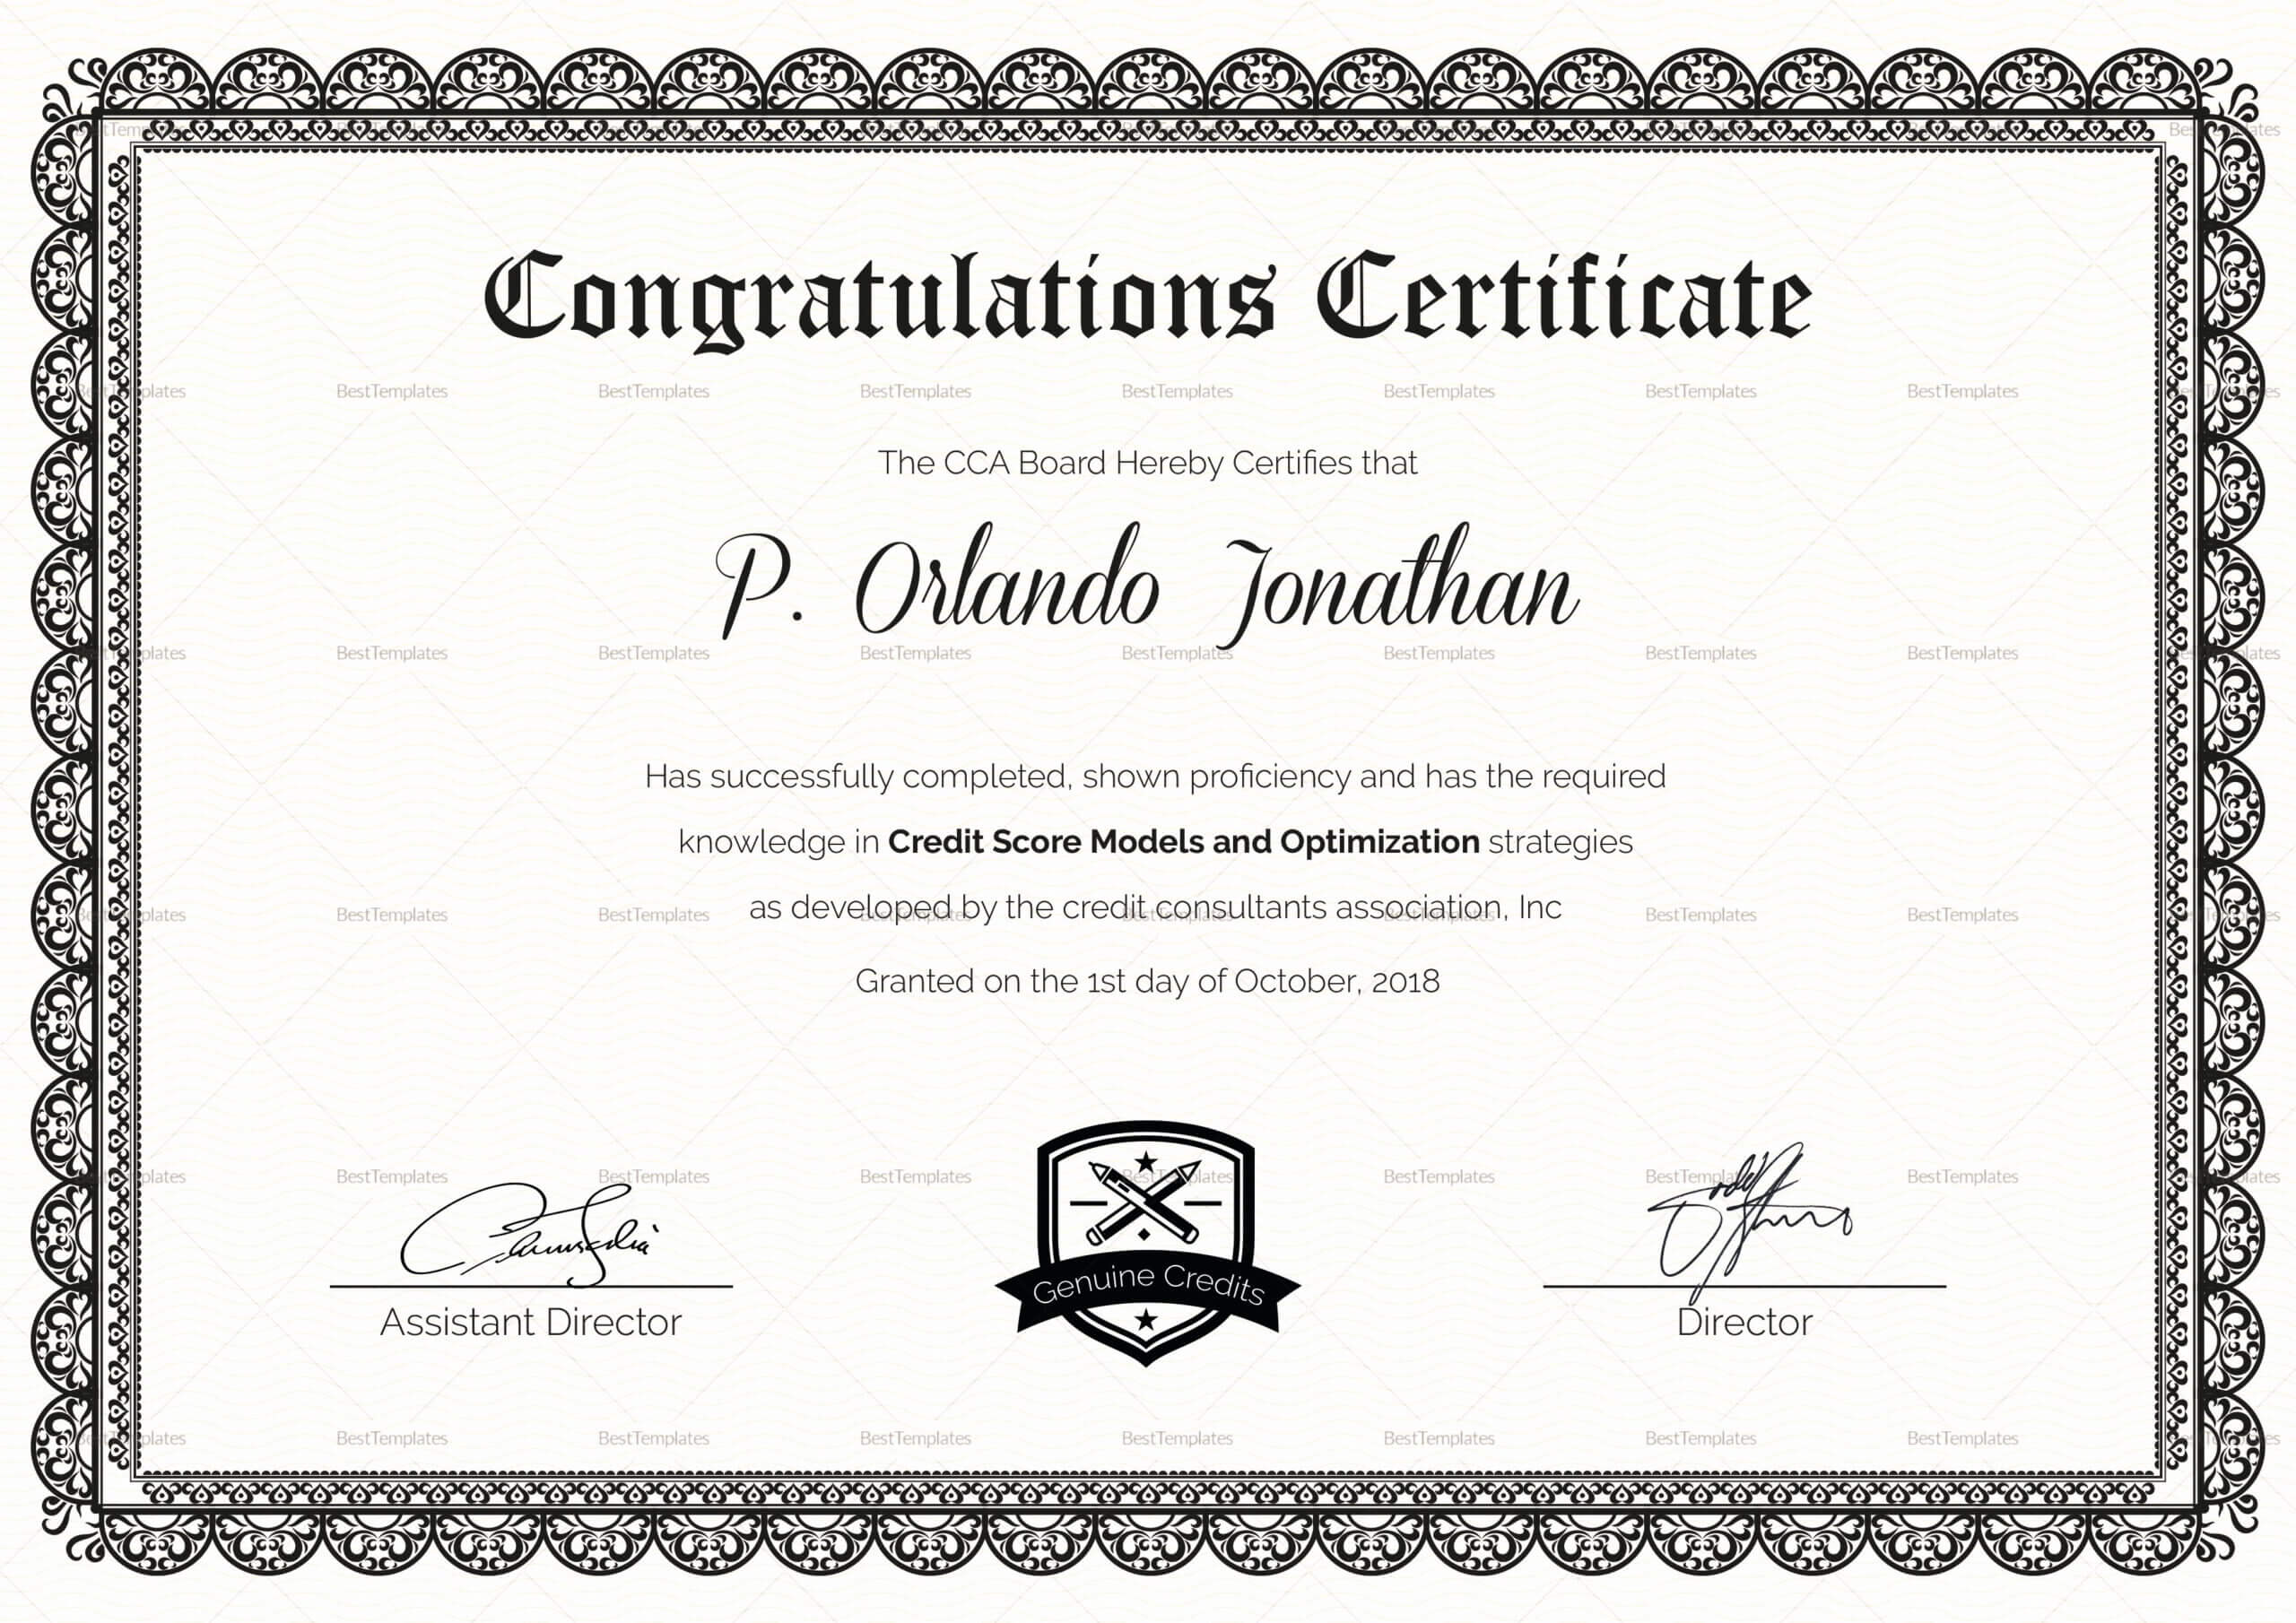 Fcd5C70 Congratulations Certificate Template | Wiring Resources Throughout Congratulations Certificate Word Template